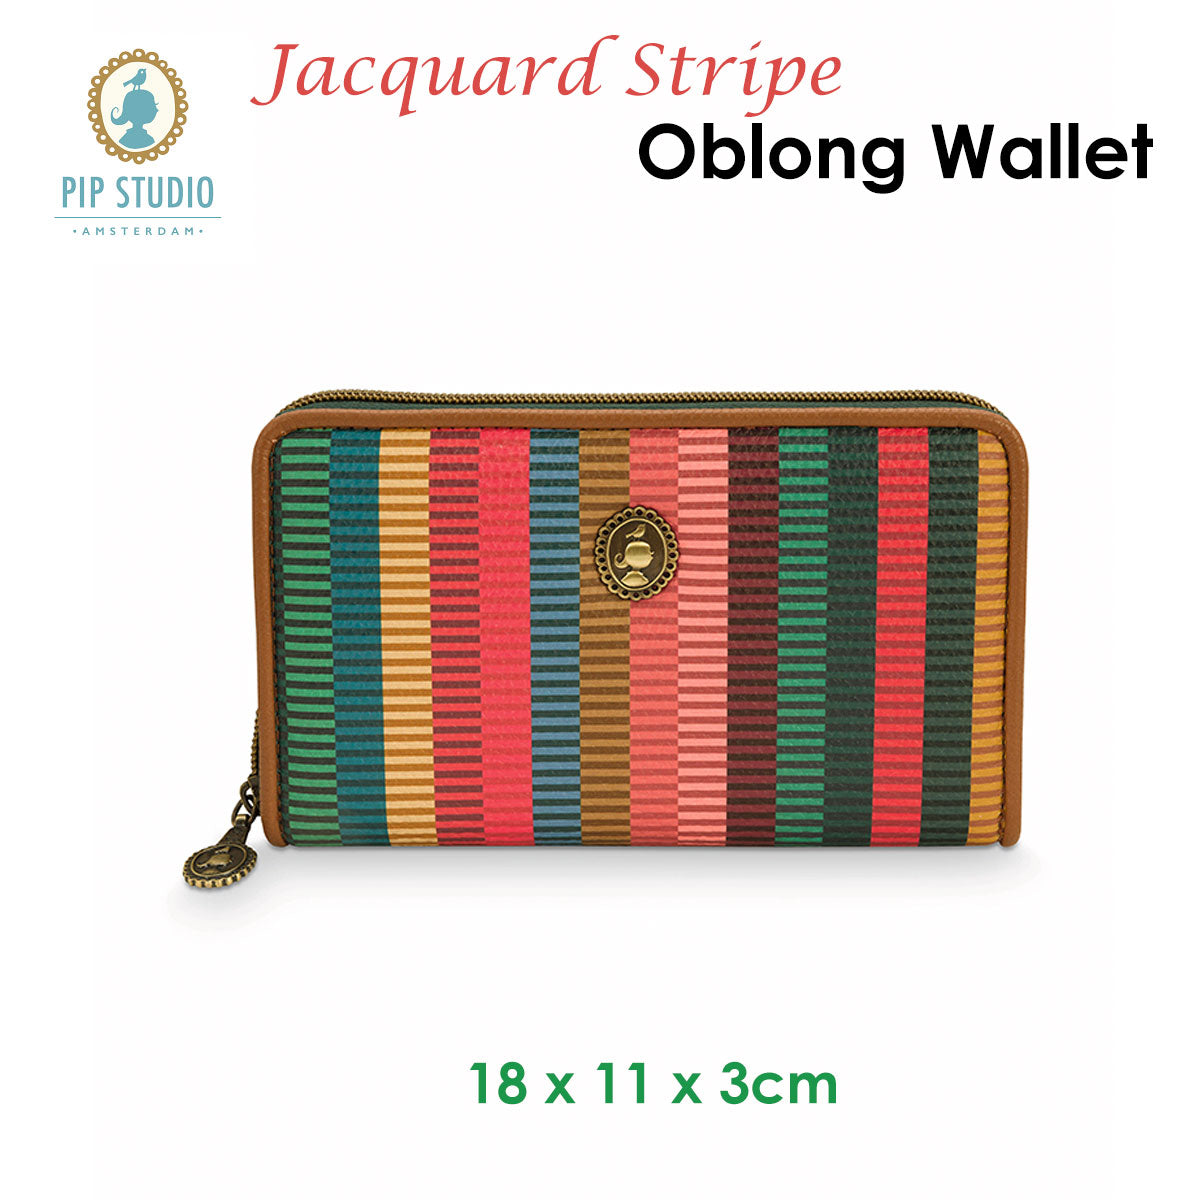 Jacquard Stripe Multi Oblong Wallet